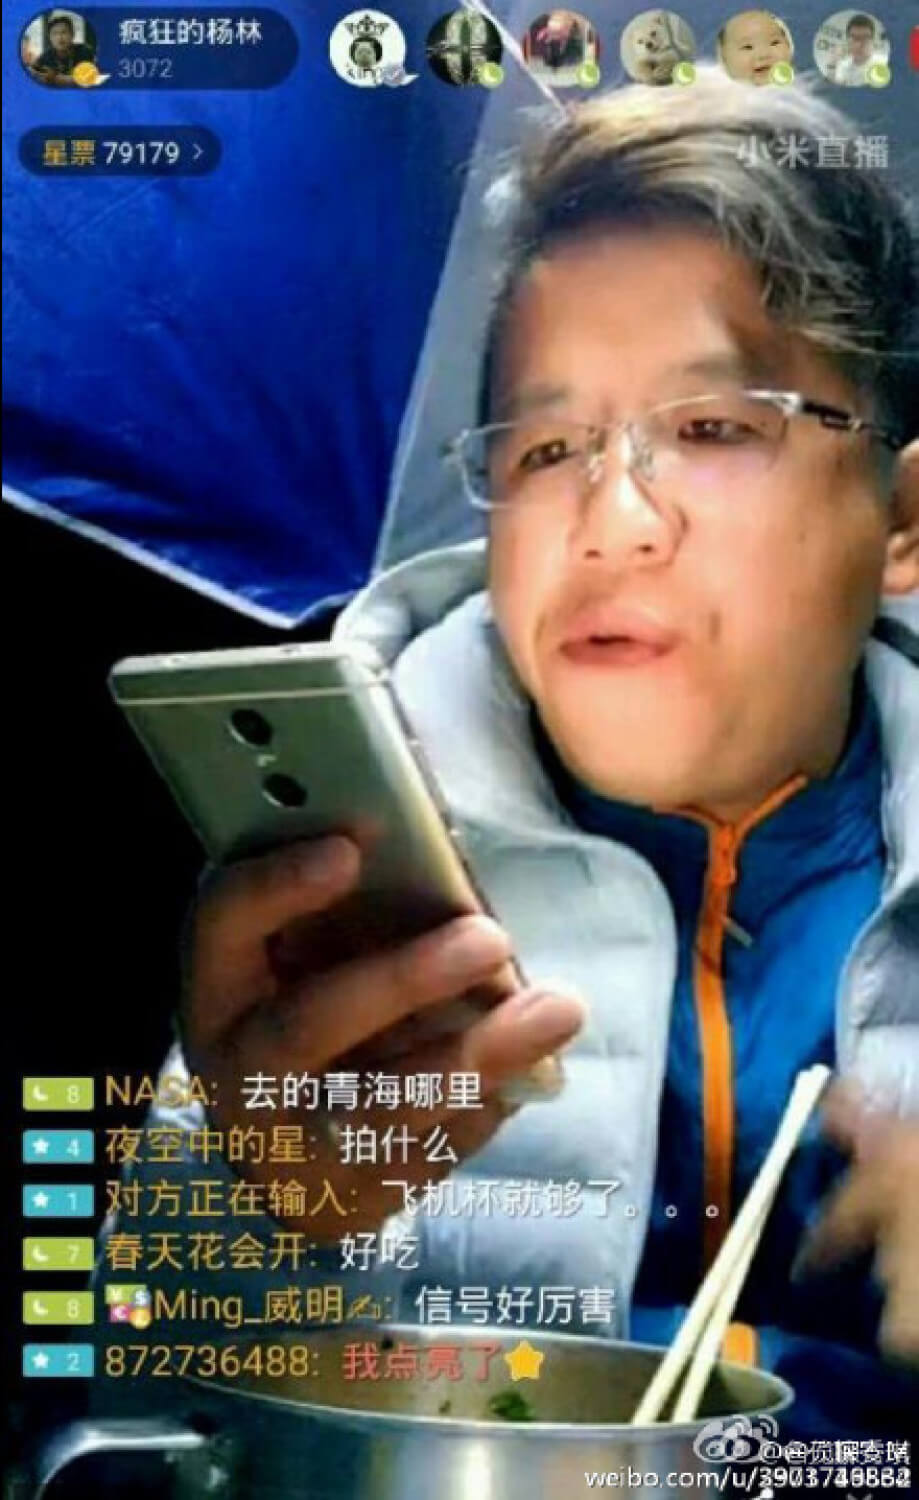 Предположительно Xiaomi Redmi Note 4 сзади и спереди на новых фото. Фото.